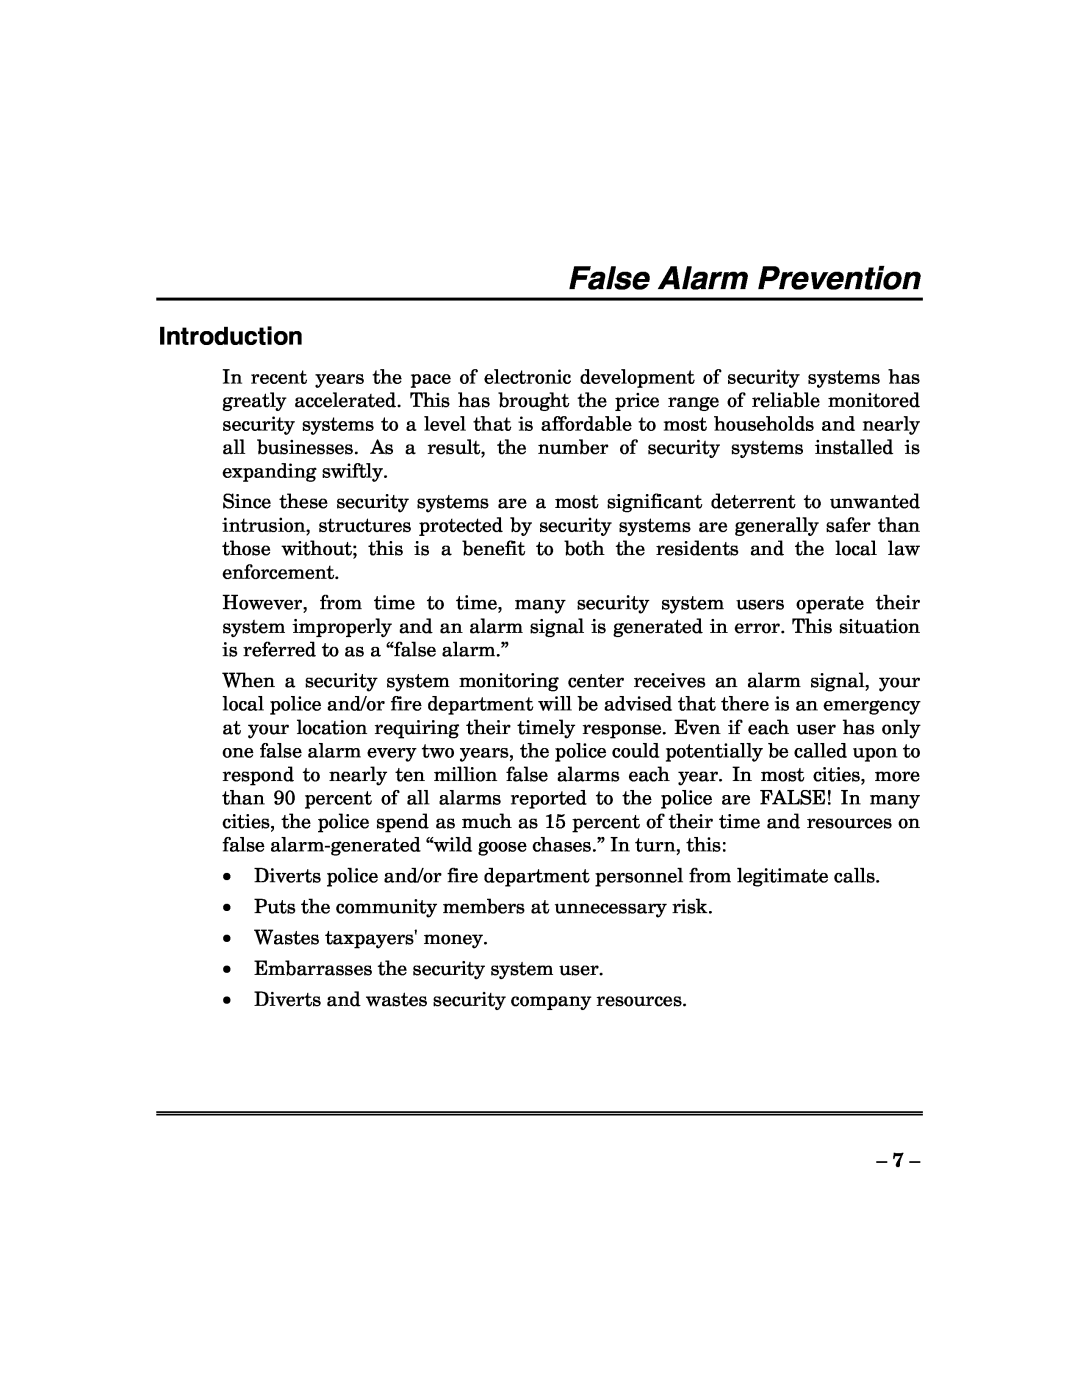 ADT Security Services 200 Plus manual False Alarm Prevention, Introduction 